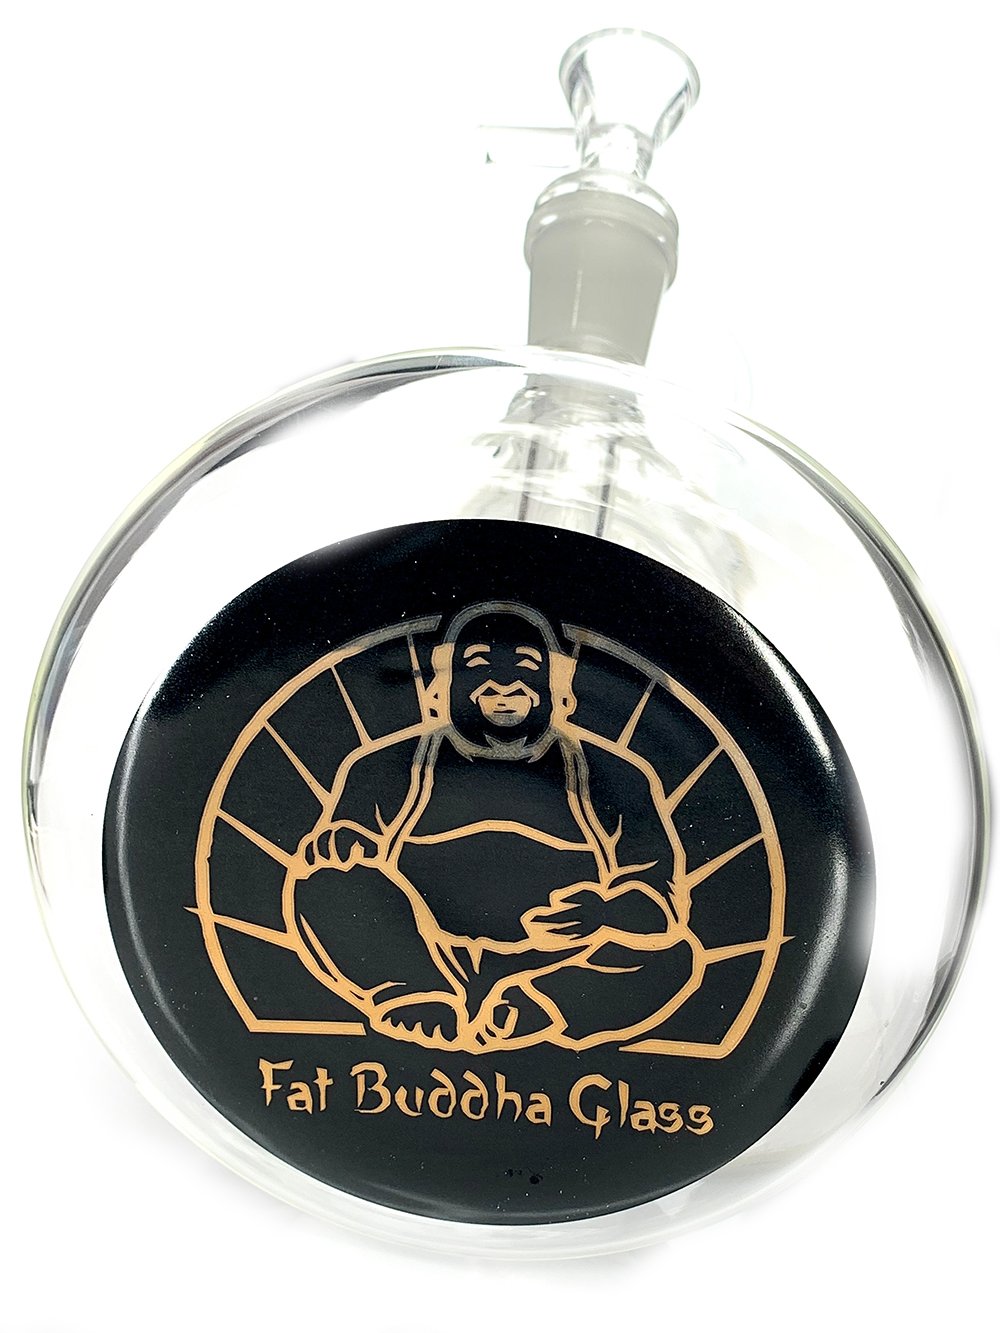 Beaker Tree Bong Fat Buddha Glass